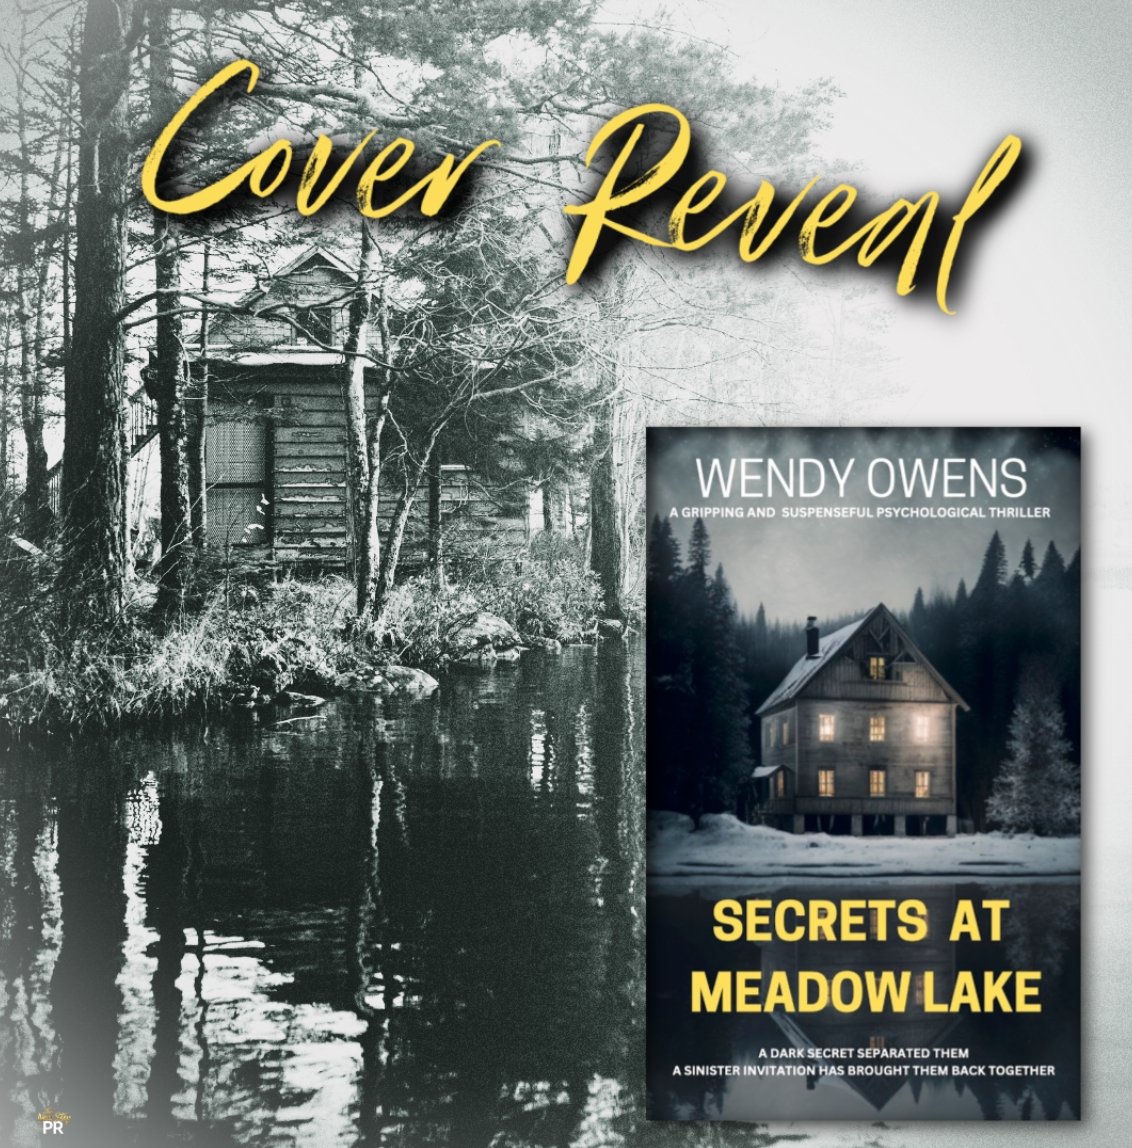 𝗖𝗢𝗩𝗘𝗥 𝗟𝗢𝗩𝗘!

#SecretsAtMeadowLake @WendyLOwens1
#SecretsAtMeadowLakeCoverReveal #WendyOwens
#PsychologicalThriller #DomesticThriller

Releasing 4.12.23

#SignUp bit.ly/ARCTourSecrets…

#GR goodreads.com/book/show/1230…

Hosted @TheNextStepPR